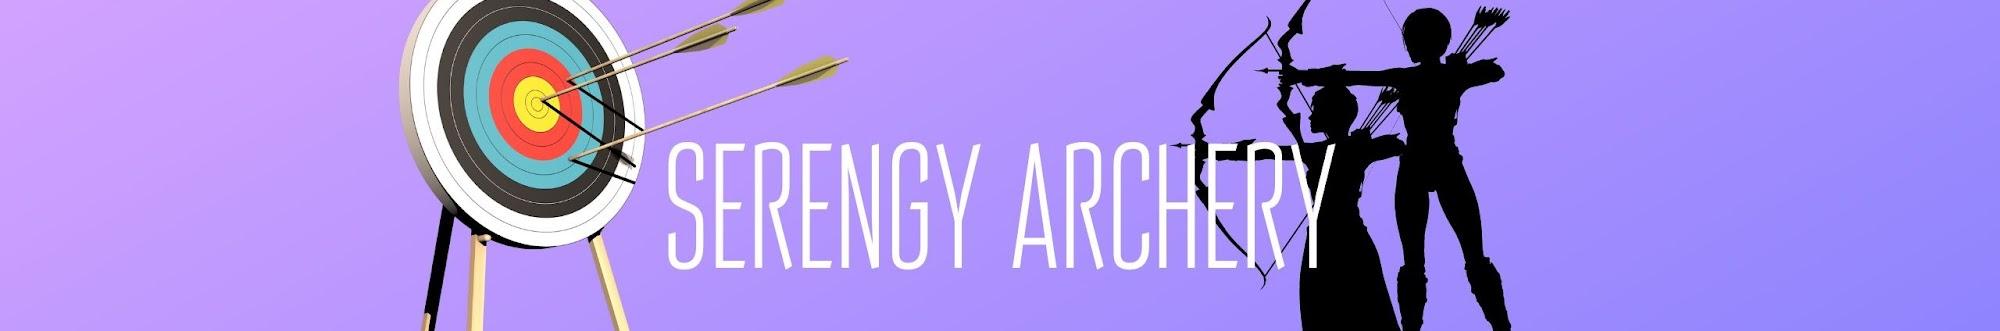 Serengy Archery